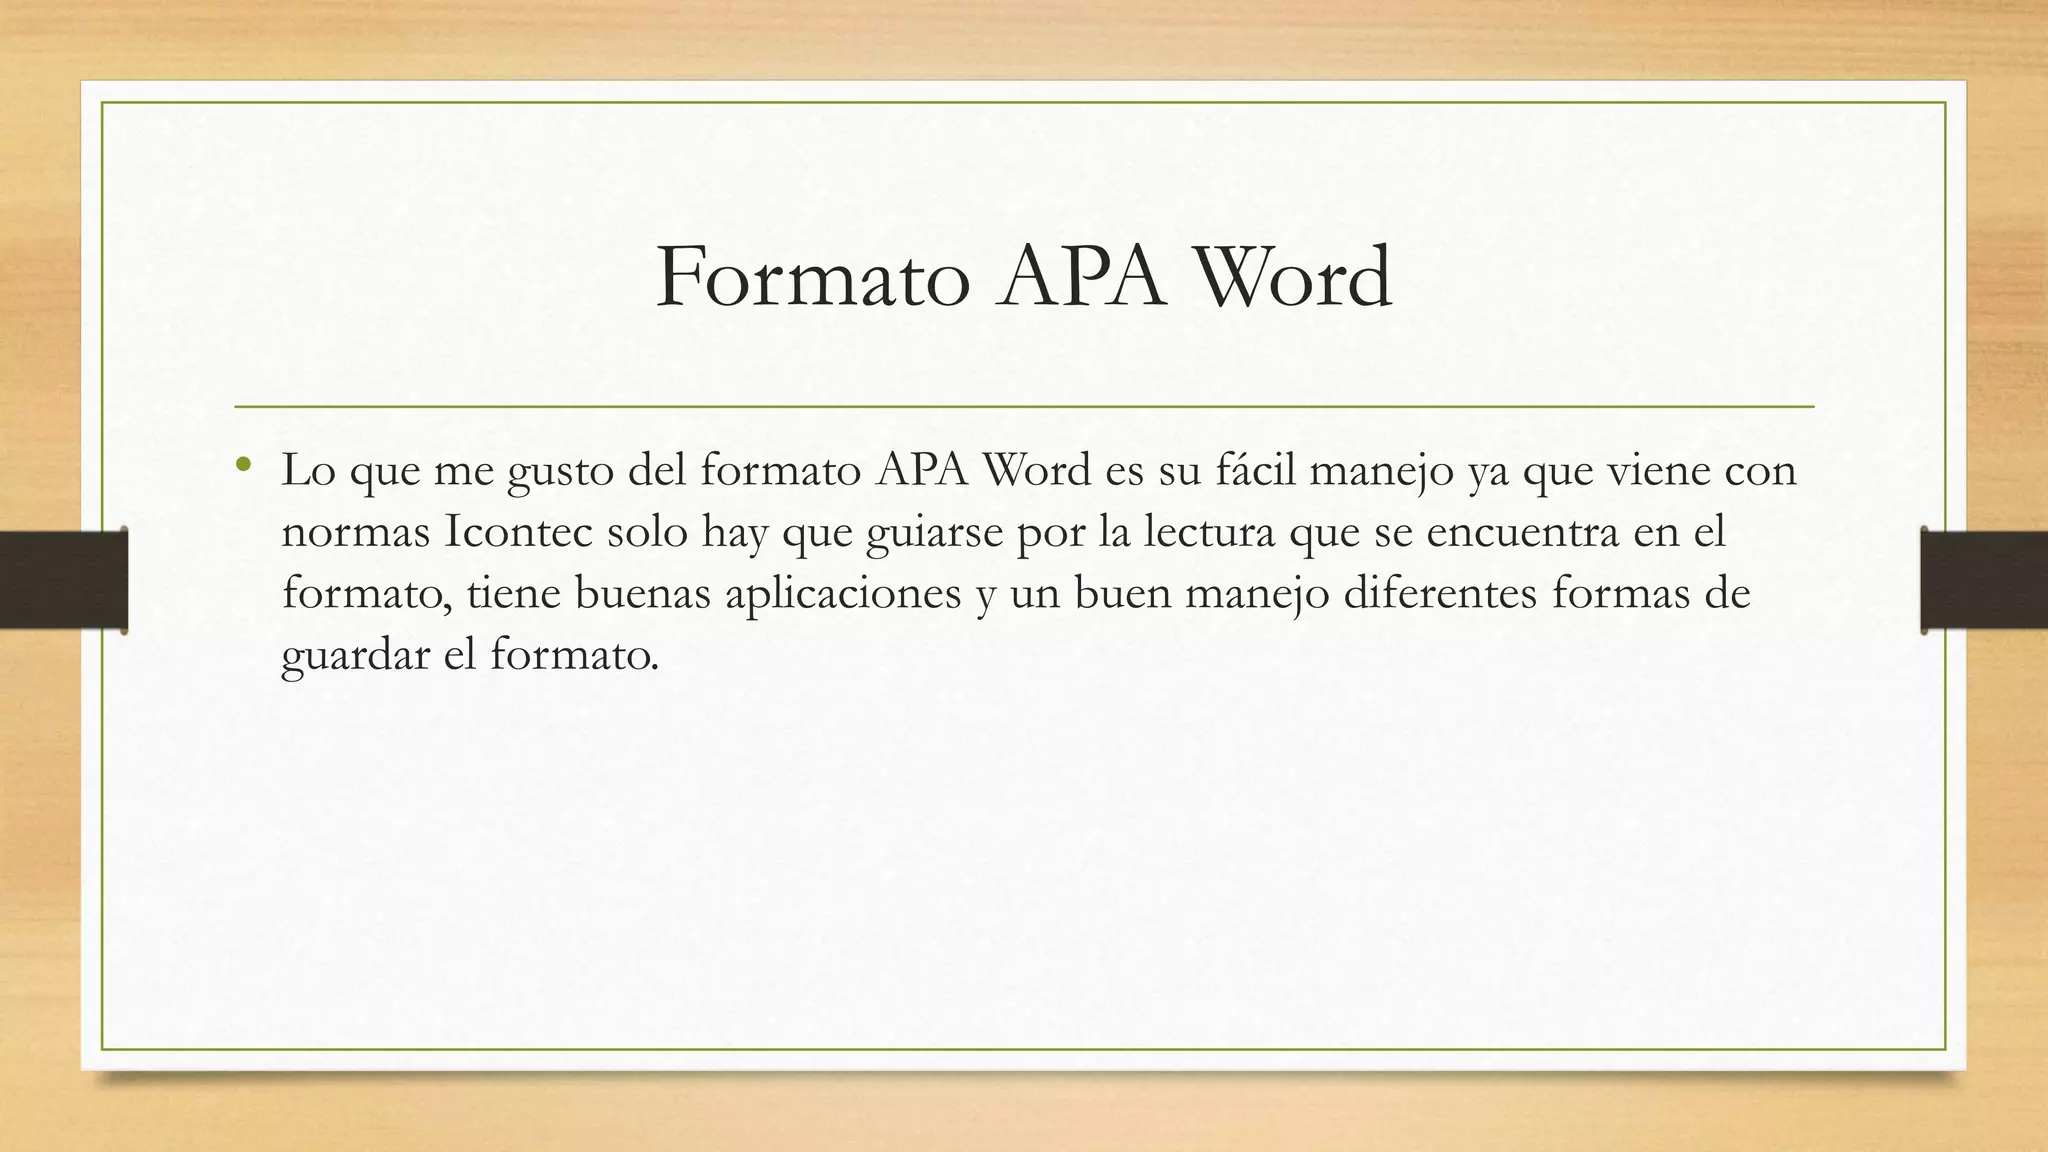 FORMATO APA WORD